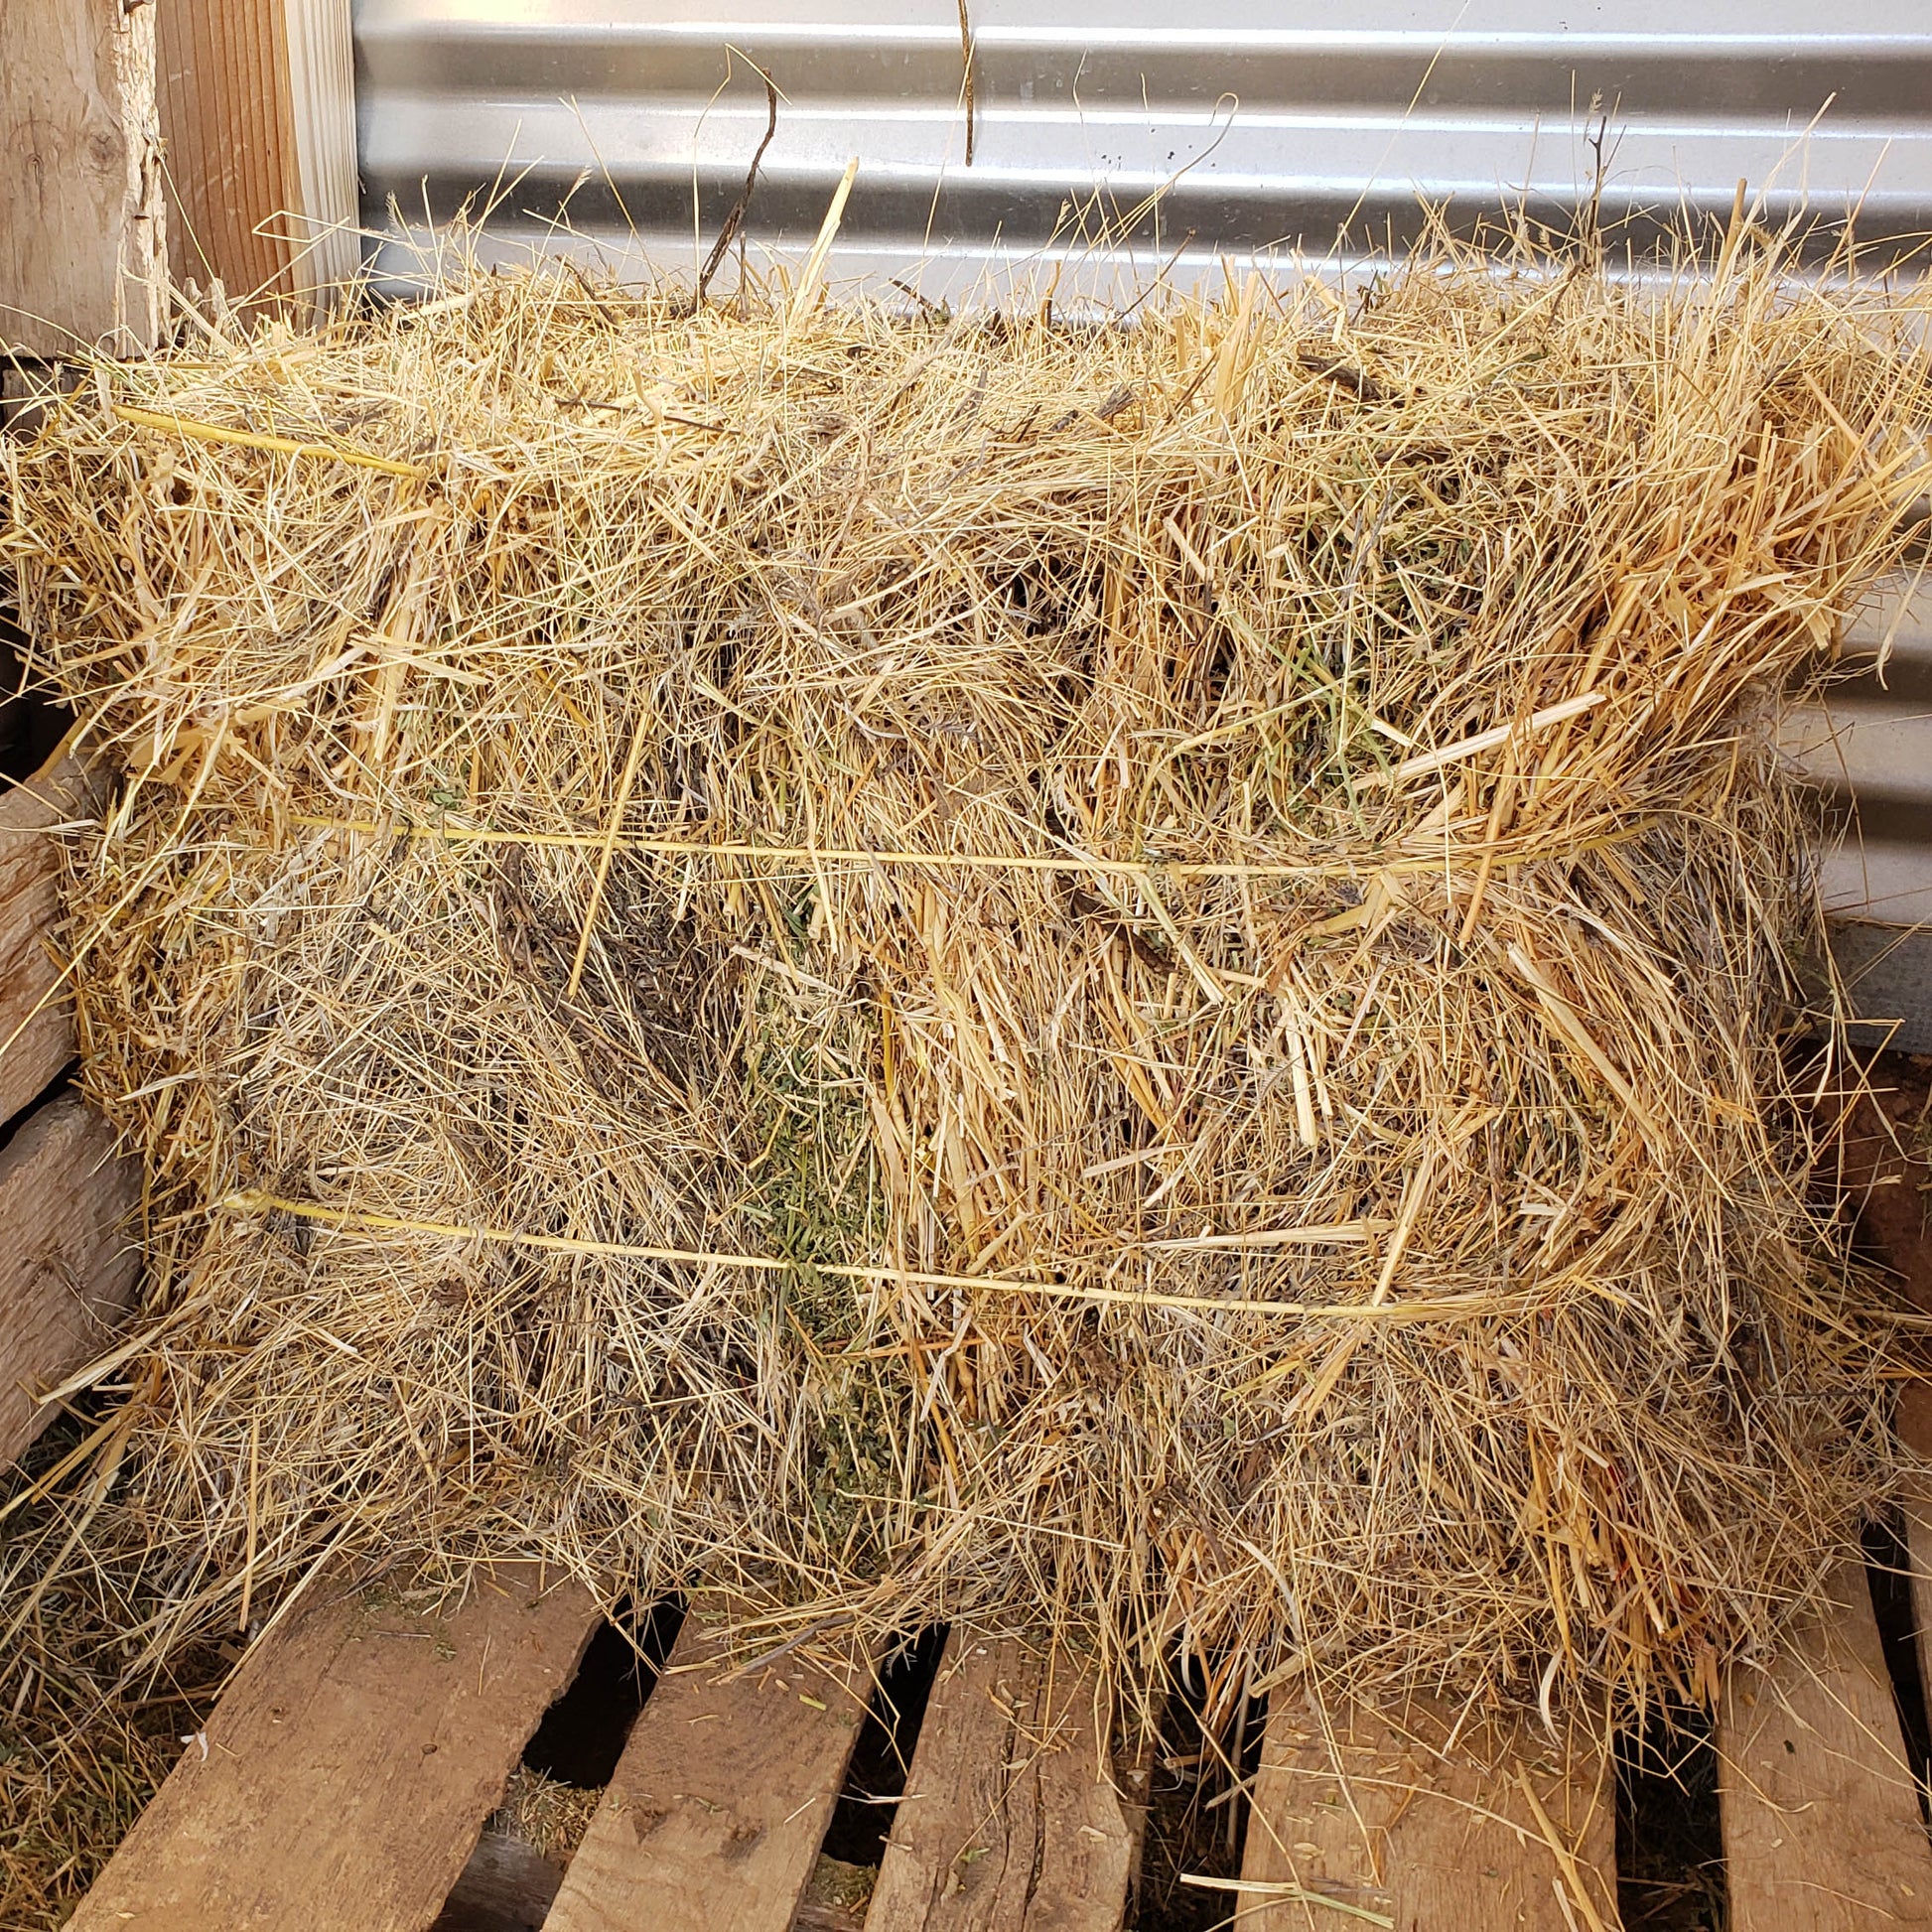 Frugal off grid Arizona Homestead diy-hay-baler course cut livestock feed cost in half